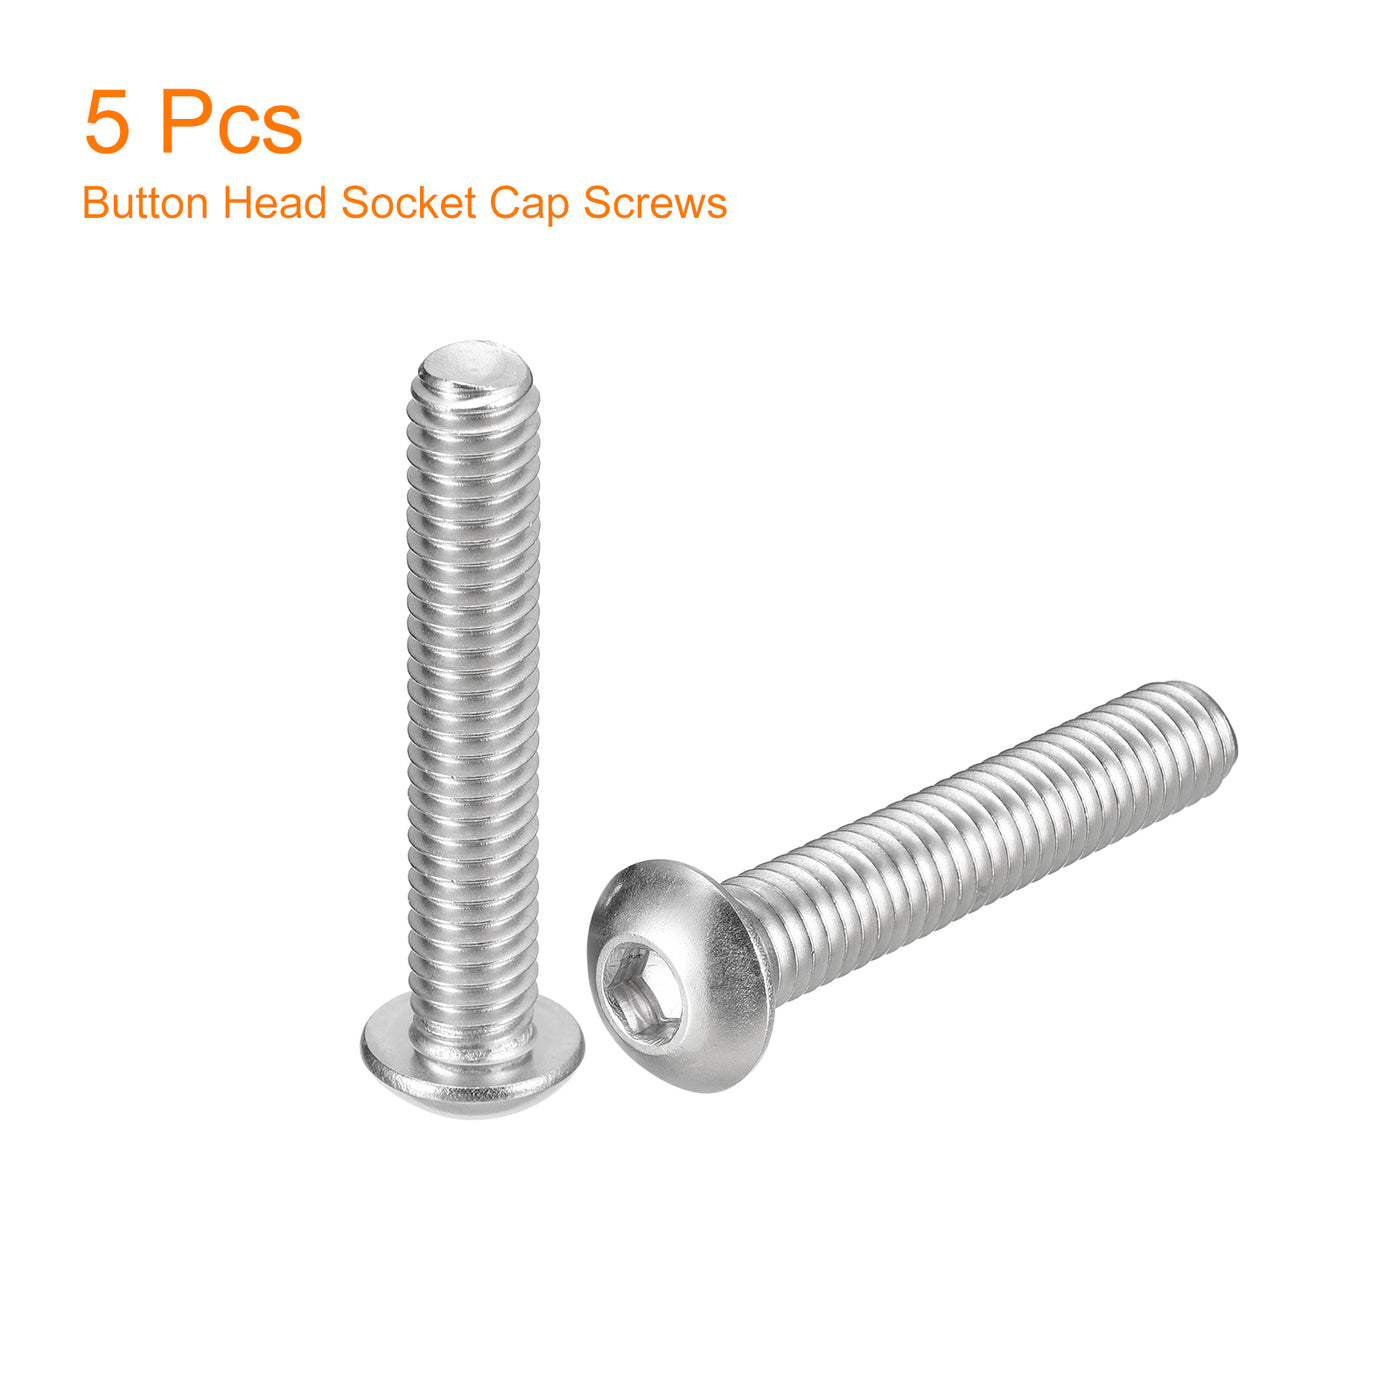 uxcell Uxcell 5/16-18x1-3/4" Button Head Socket Cap Screws, 5pcs 304 Stainless Steel Screws